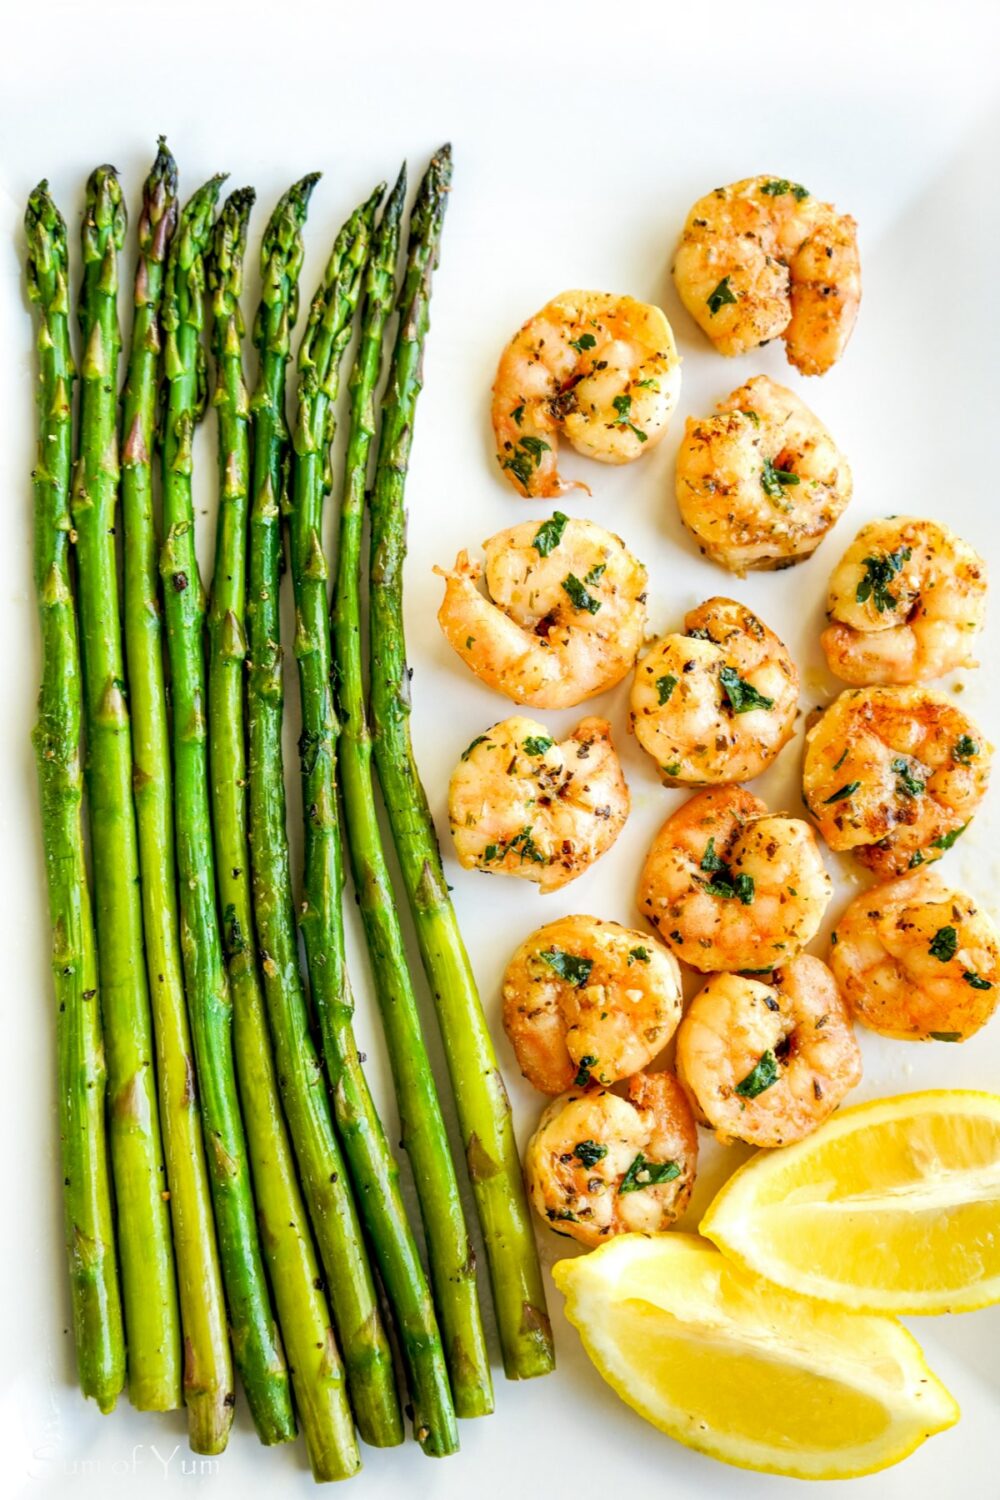 Shrimp and Asparagus with Lemon and Herbs